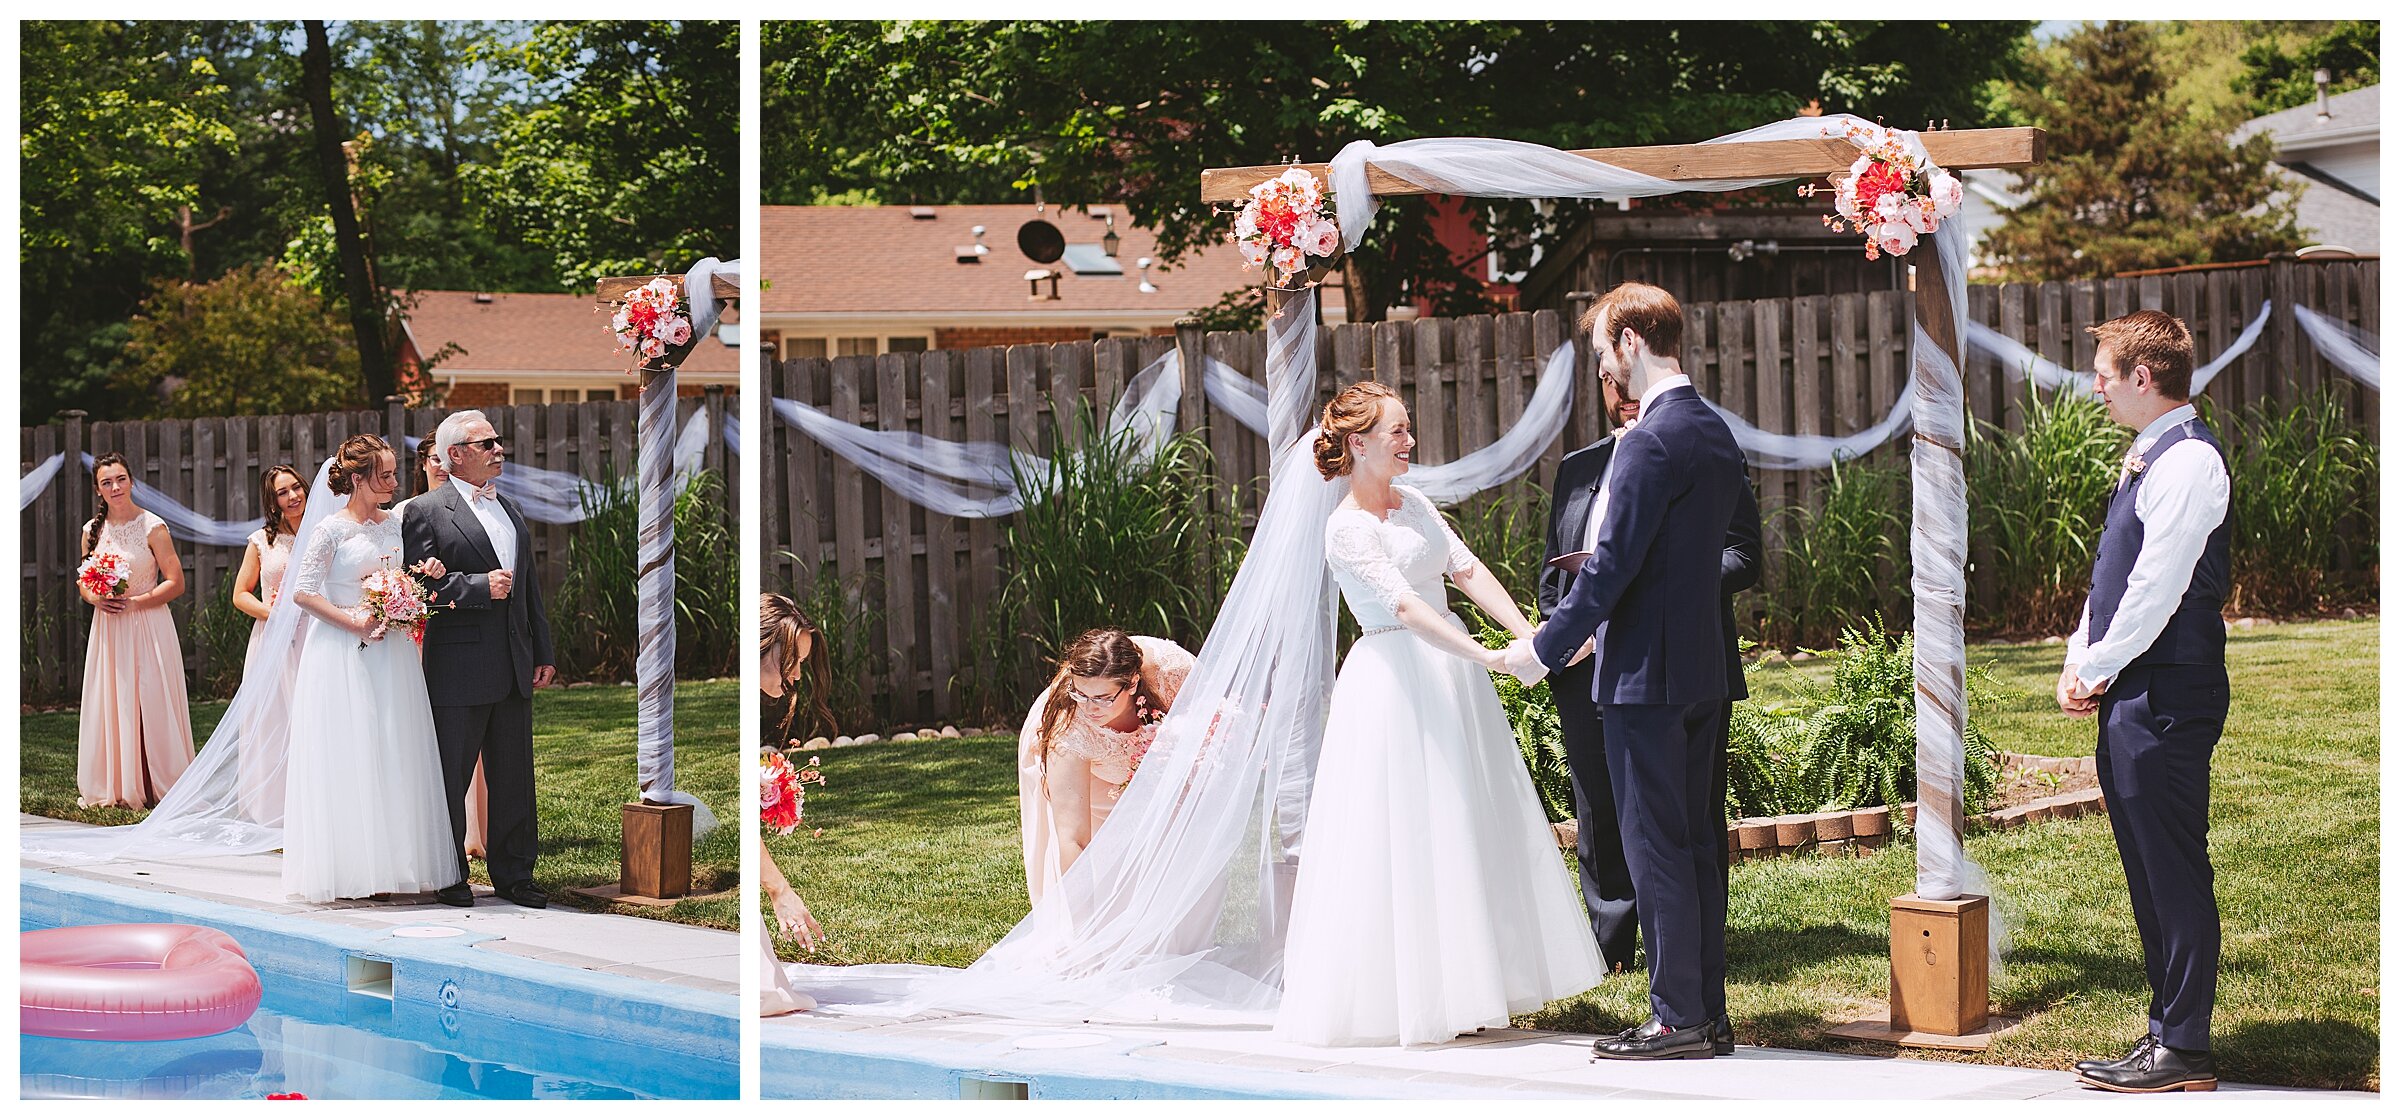 BLOG-backyard-frankfort-illinois-wedding-mackenzie-jarrin-202006-41.jpg